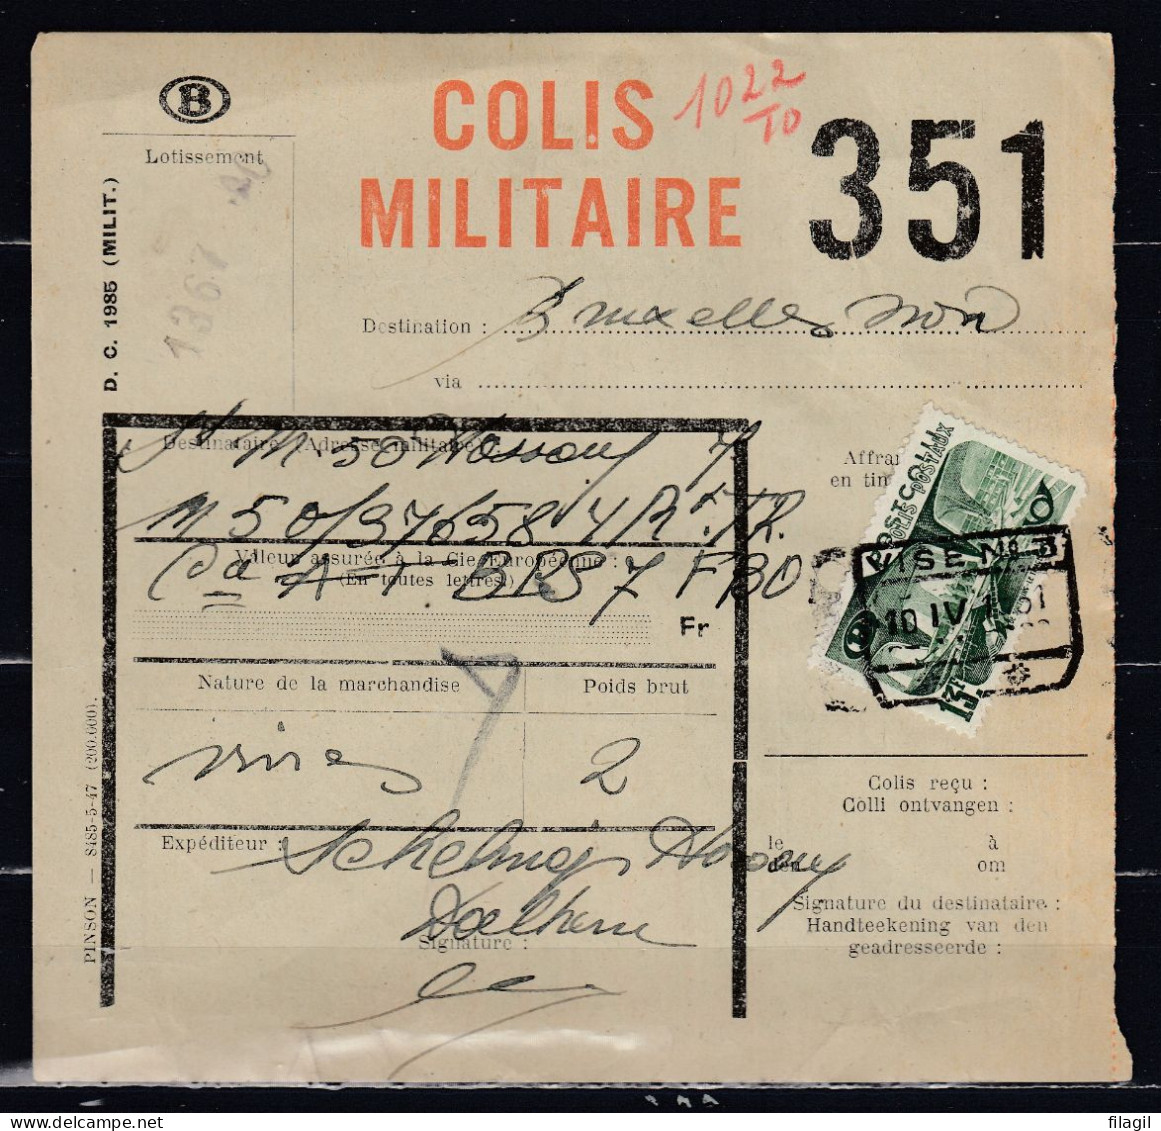 Vrachtbrief Met Stempel VISE N°3 COLIS MILITAIRE - Documents & Fragments